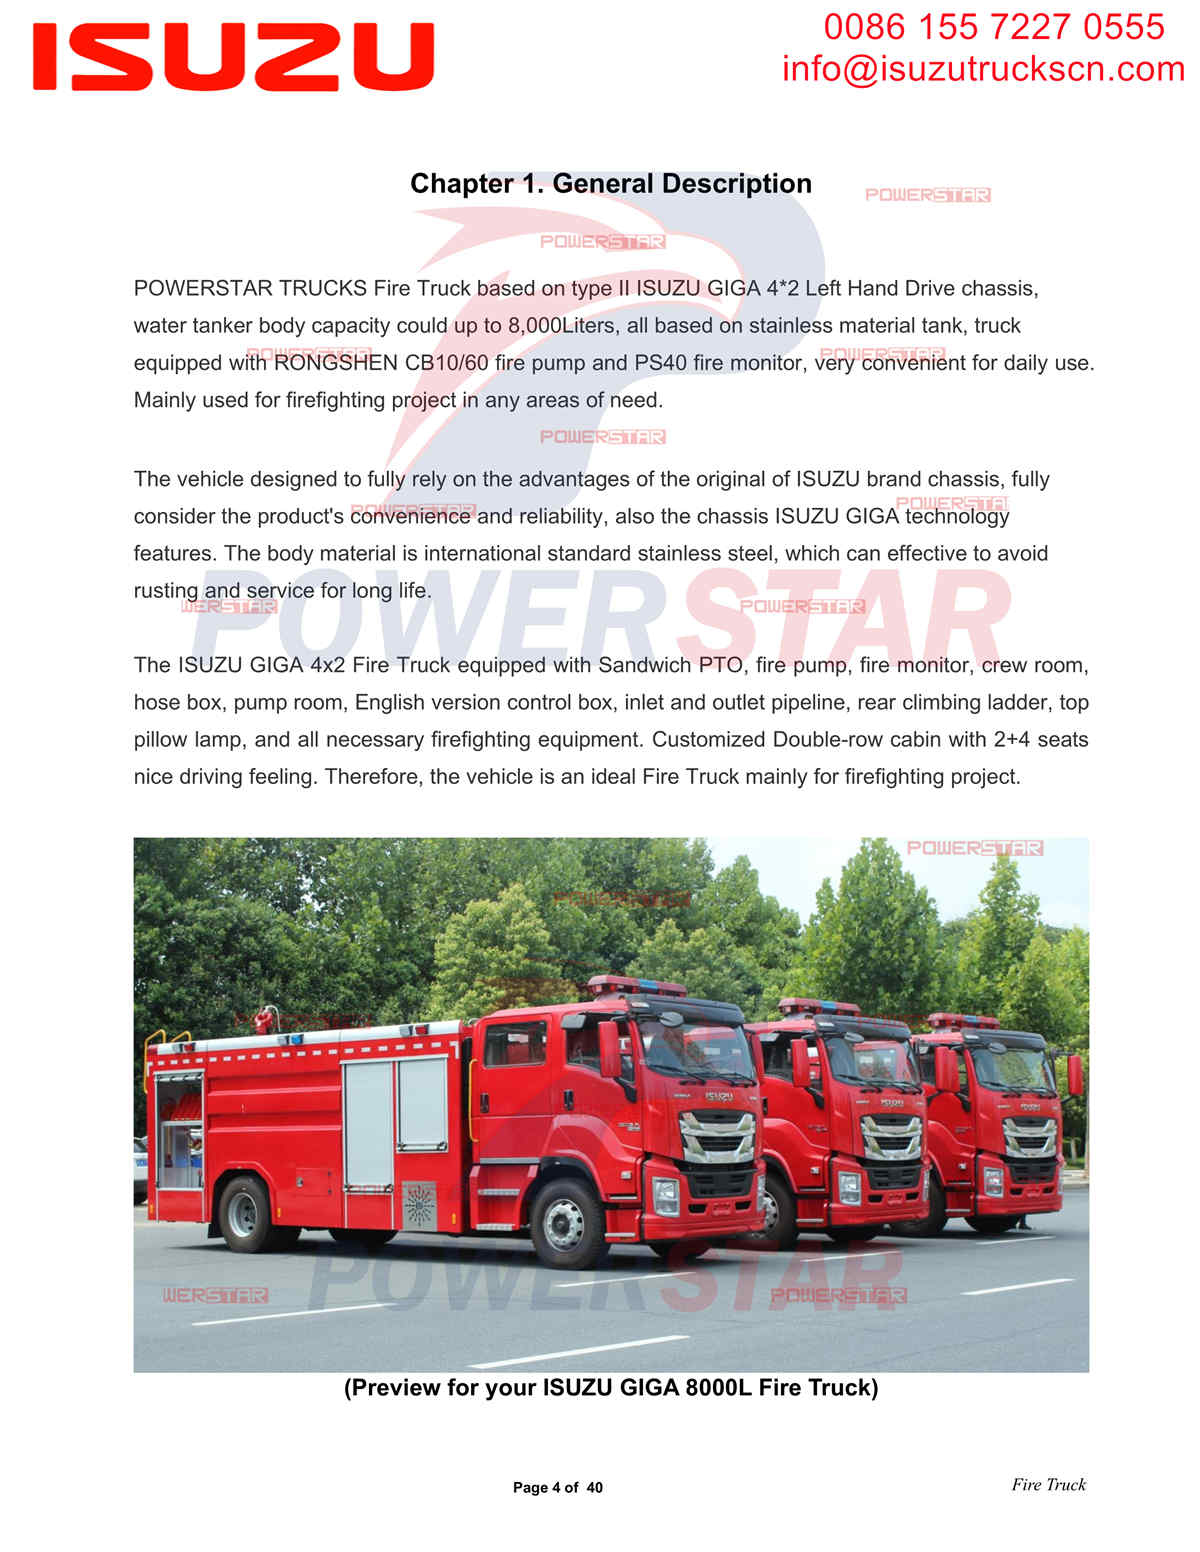 Isuzu giga water fire fighting trucks on sale